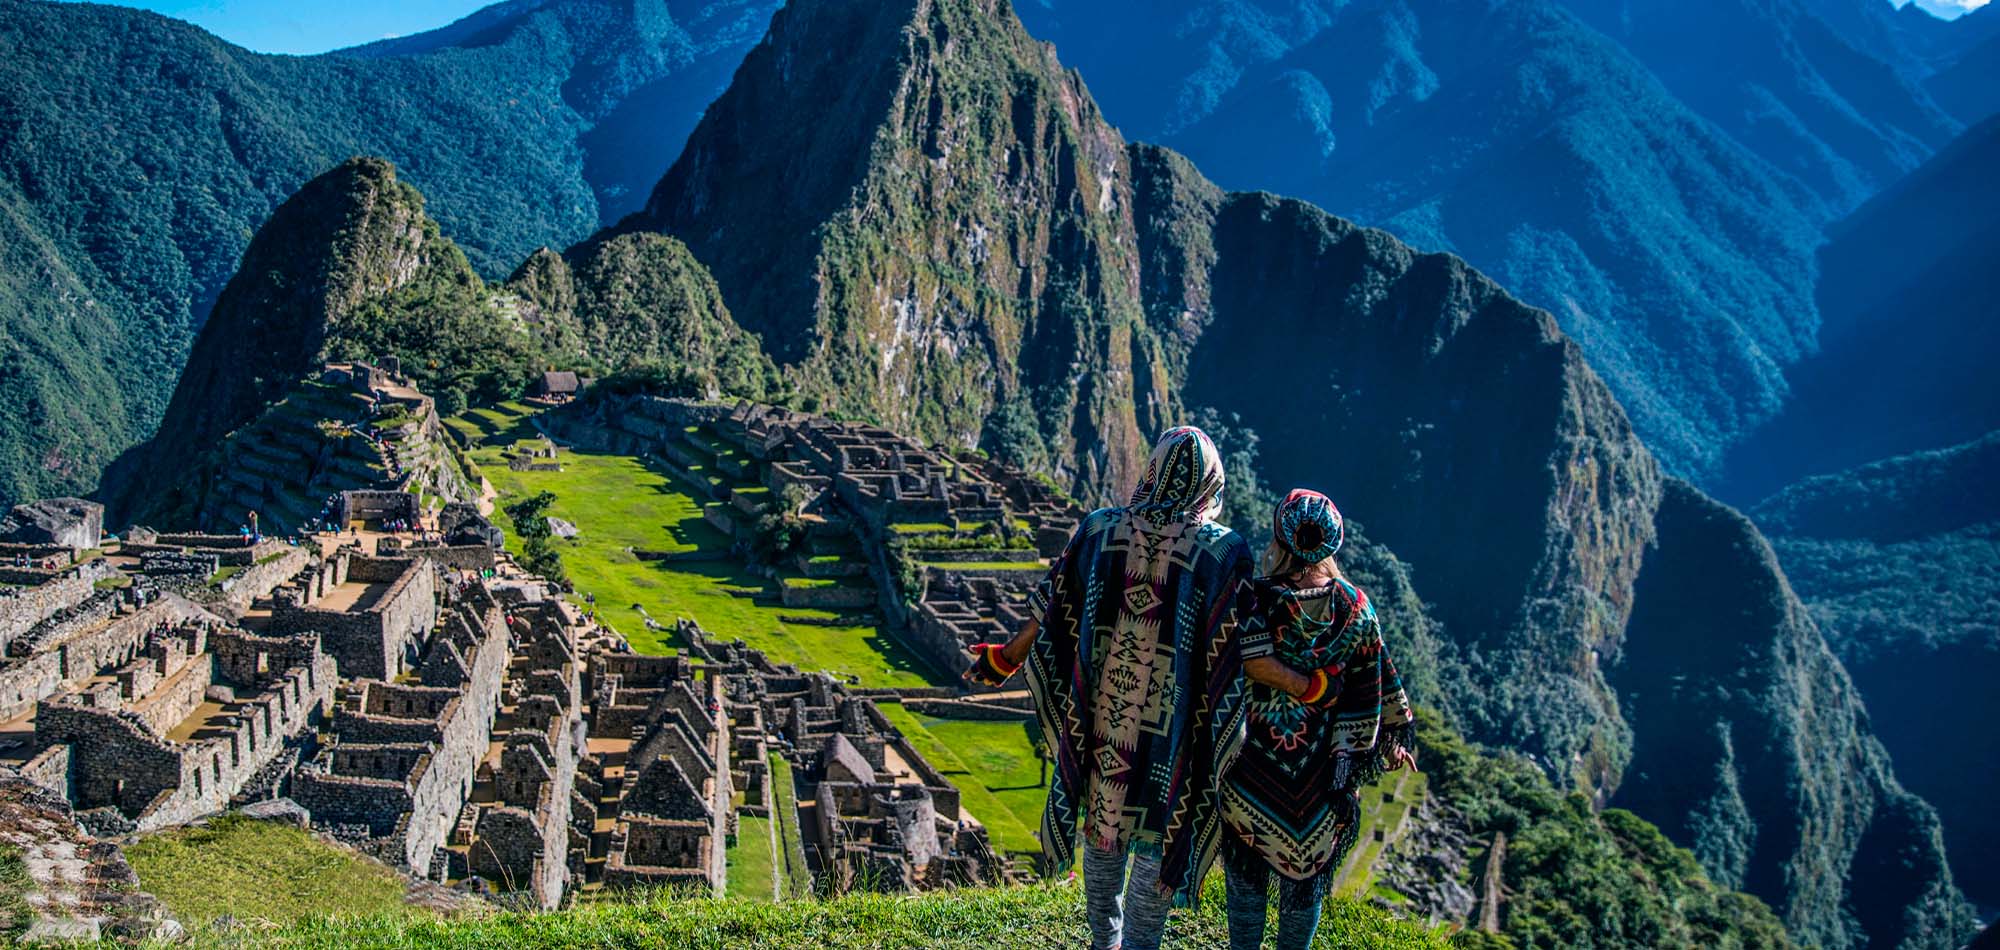 Machu Picchu Ticket Availability Online - Incatrailhikeperu

1天印加古道到马丘比丘